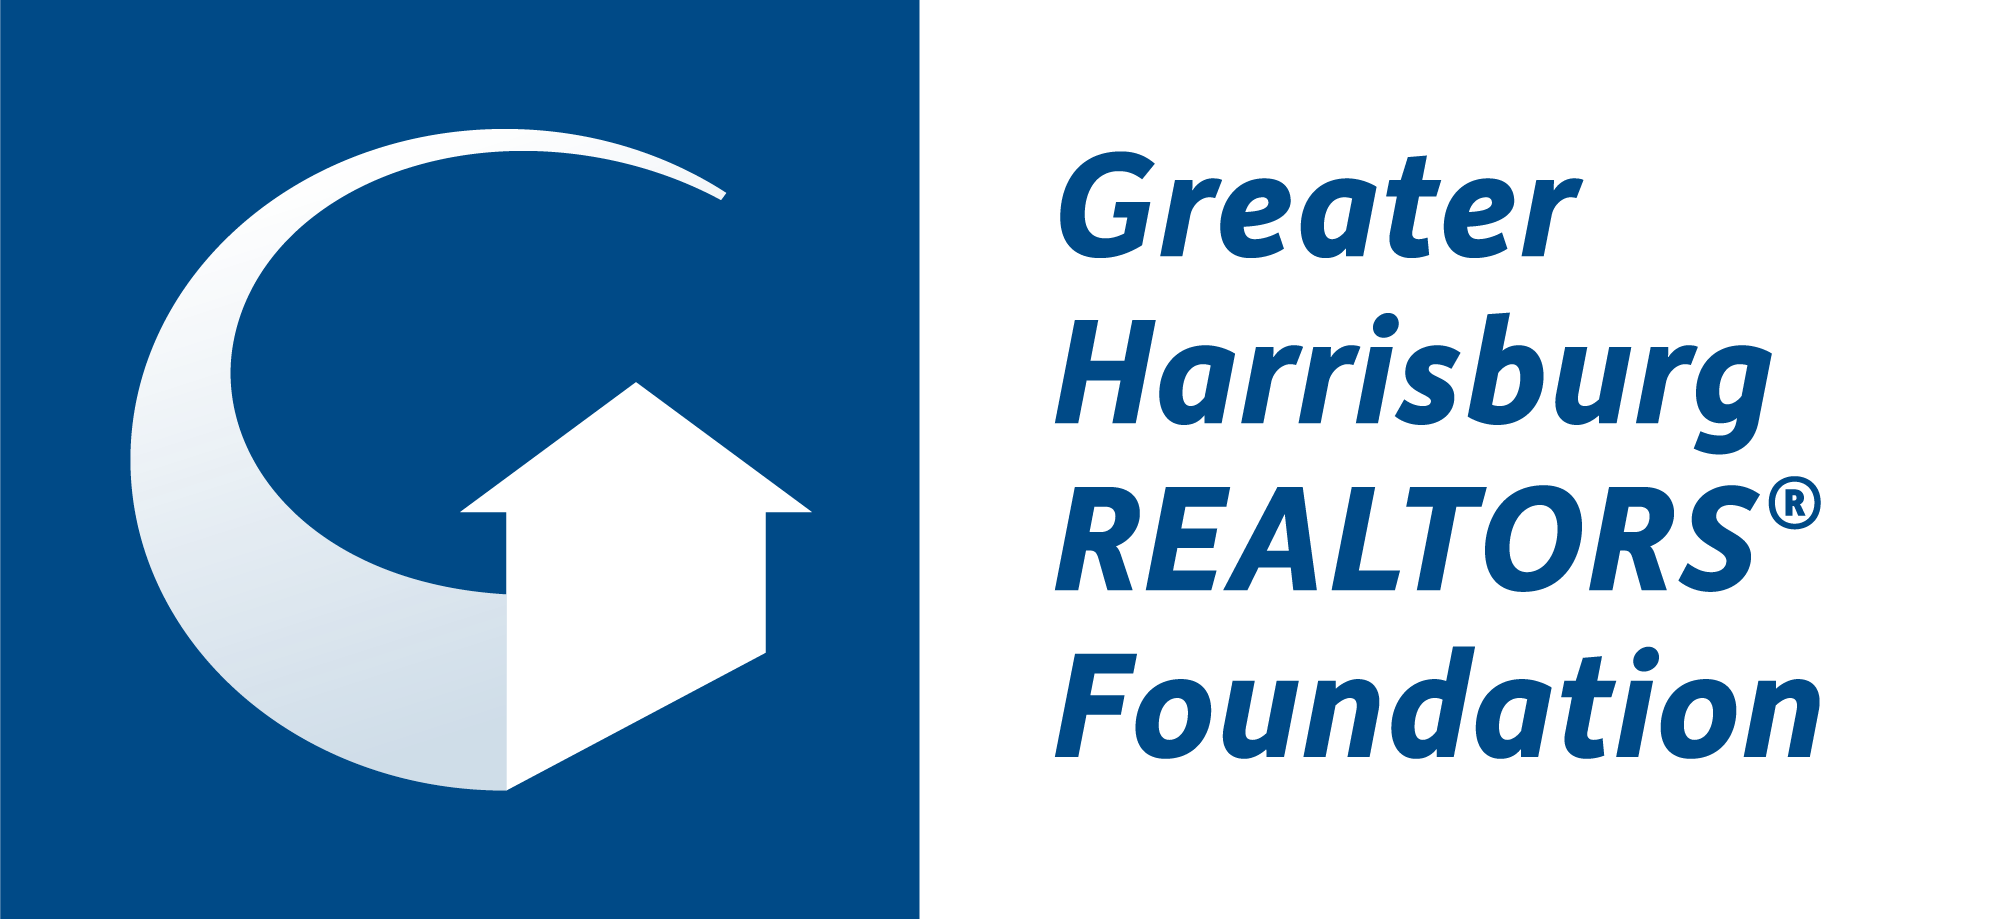 Greater Harrisburg REALTORS® Foundation